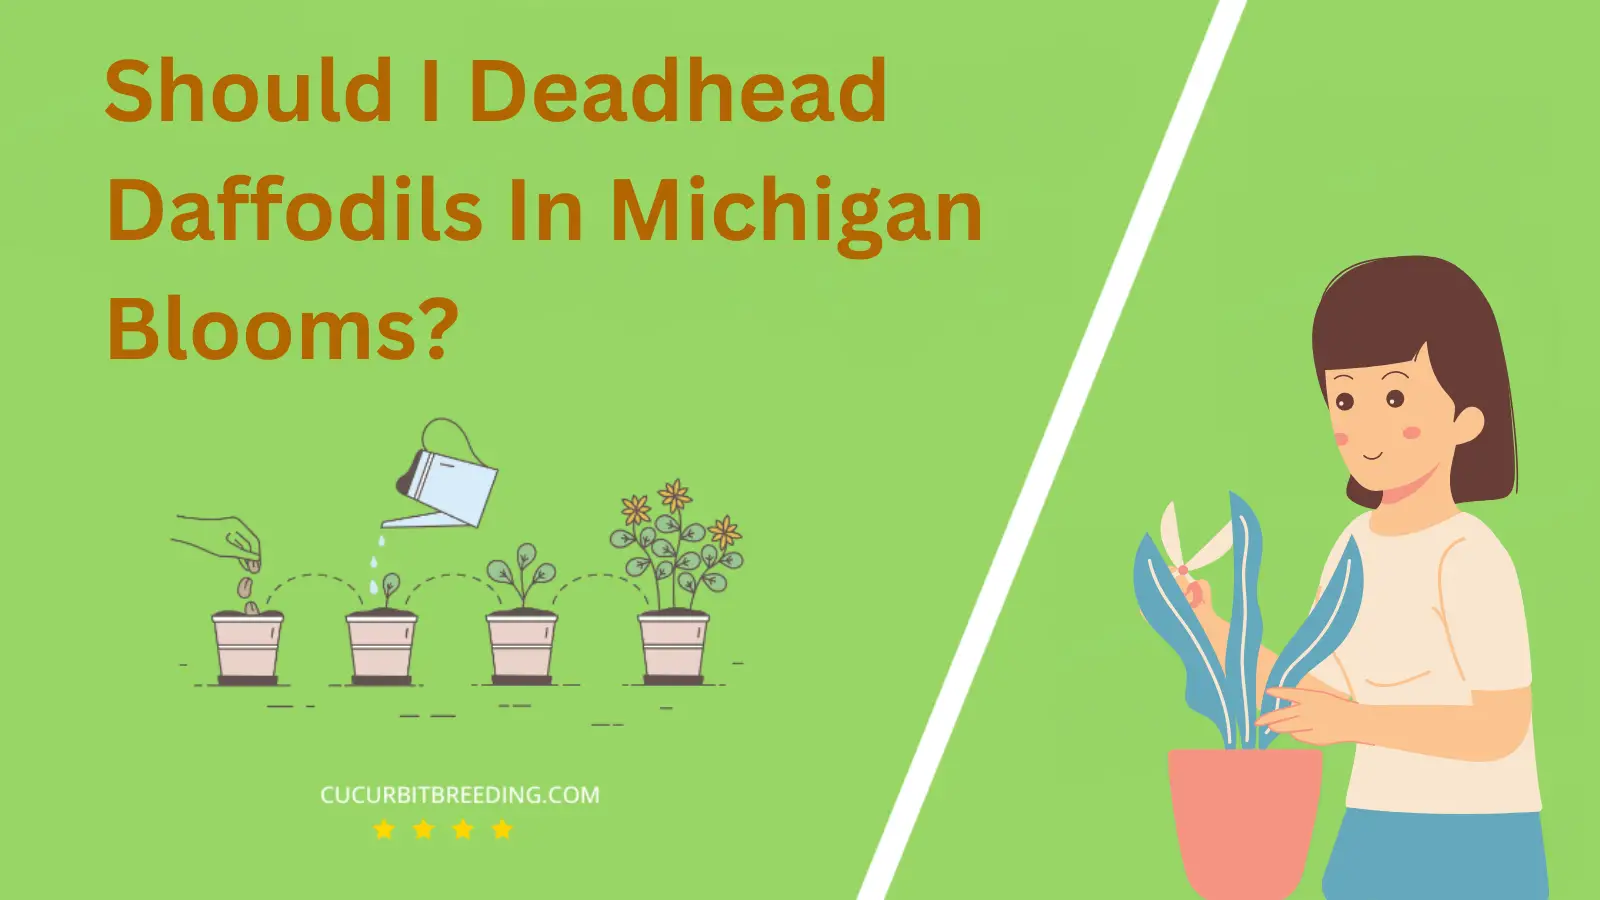 Should I Deadhead Daffodils In Michigan Blooms?